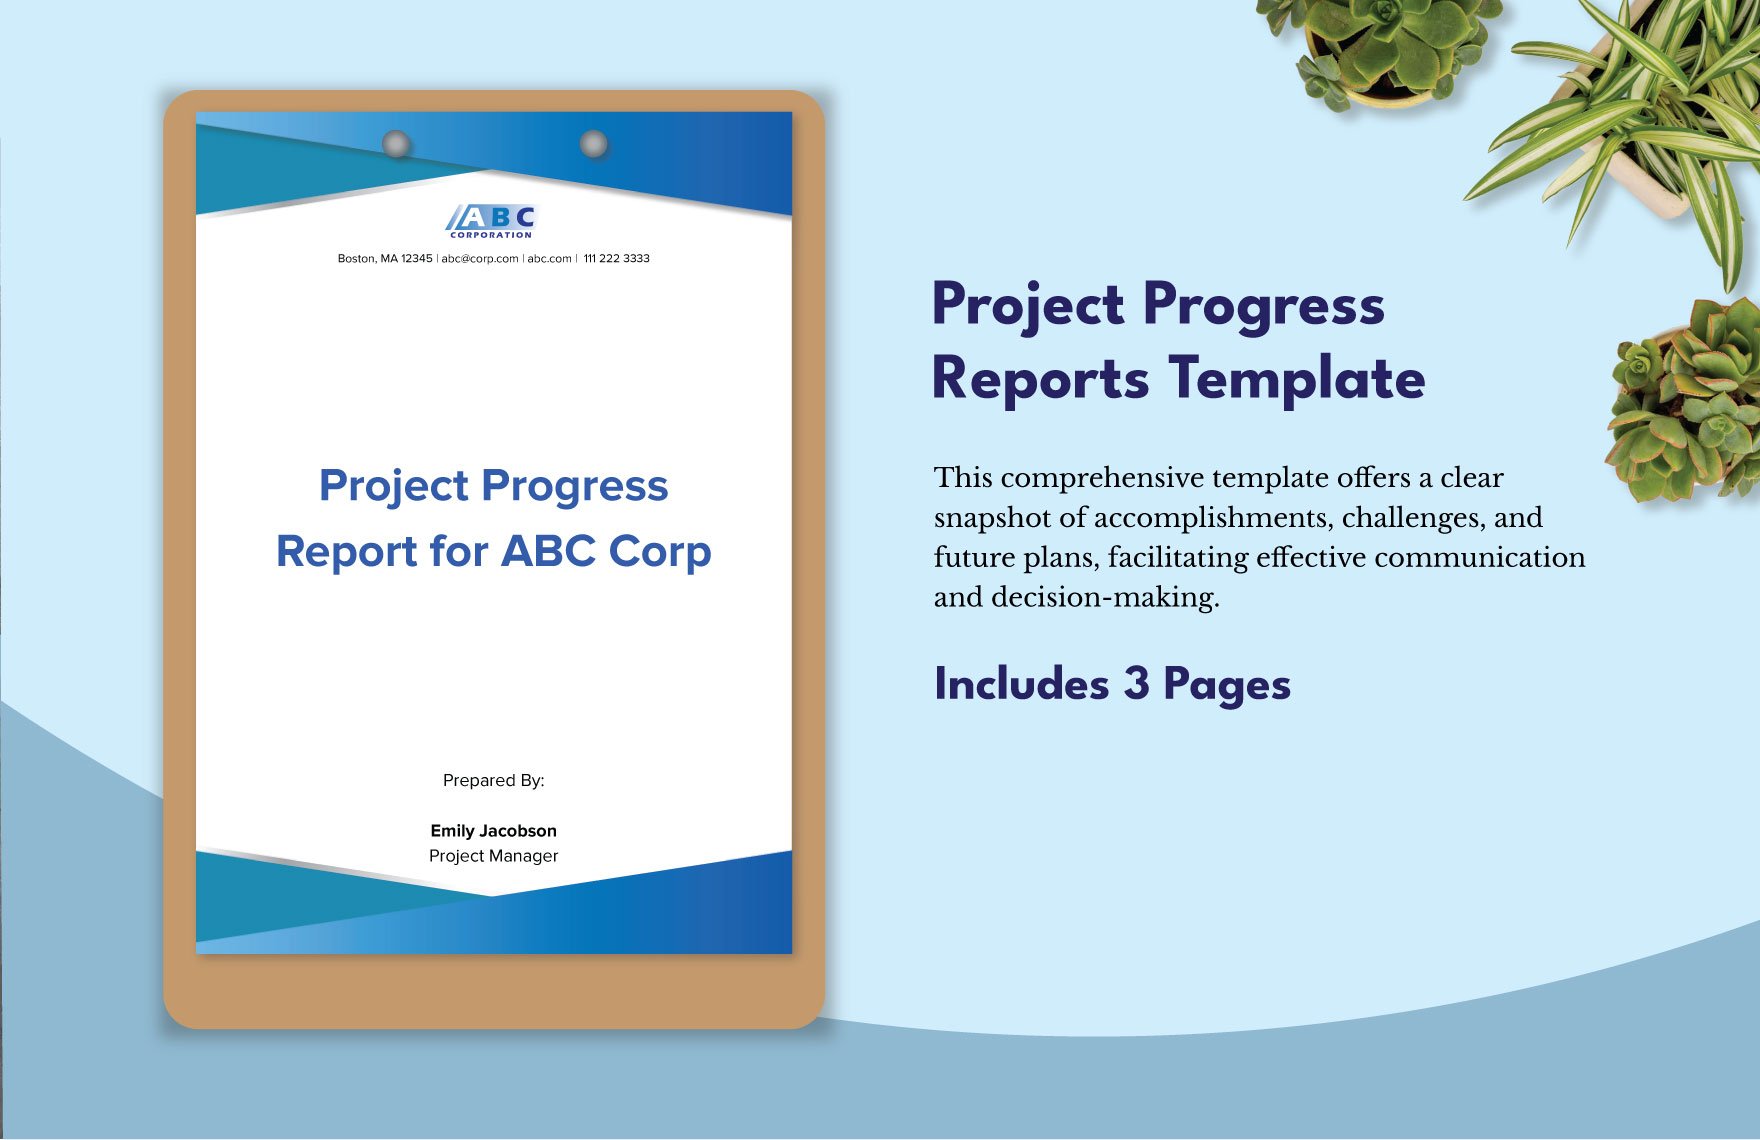 Project Progress Reports Template